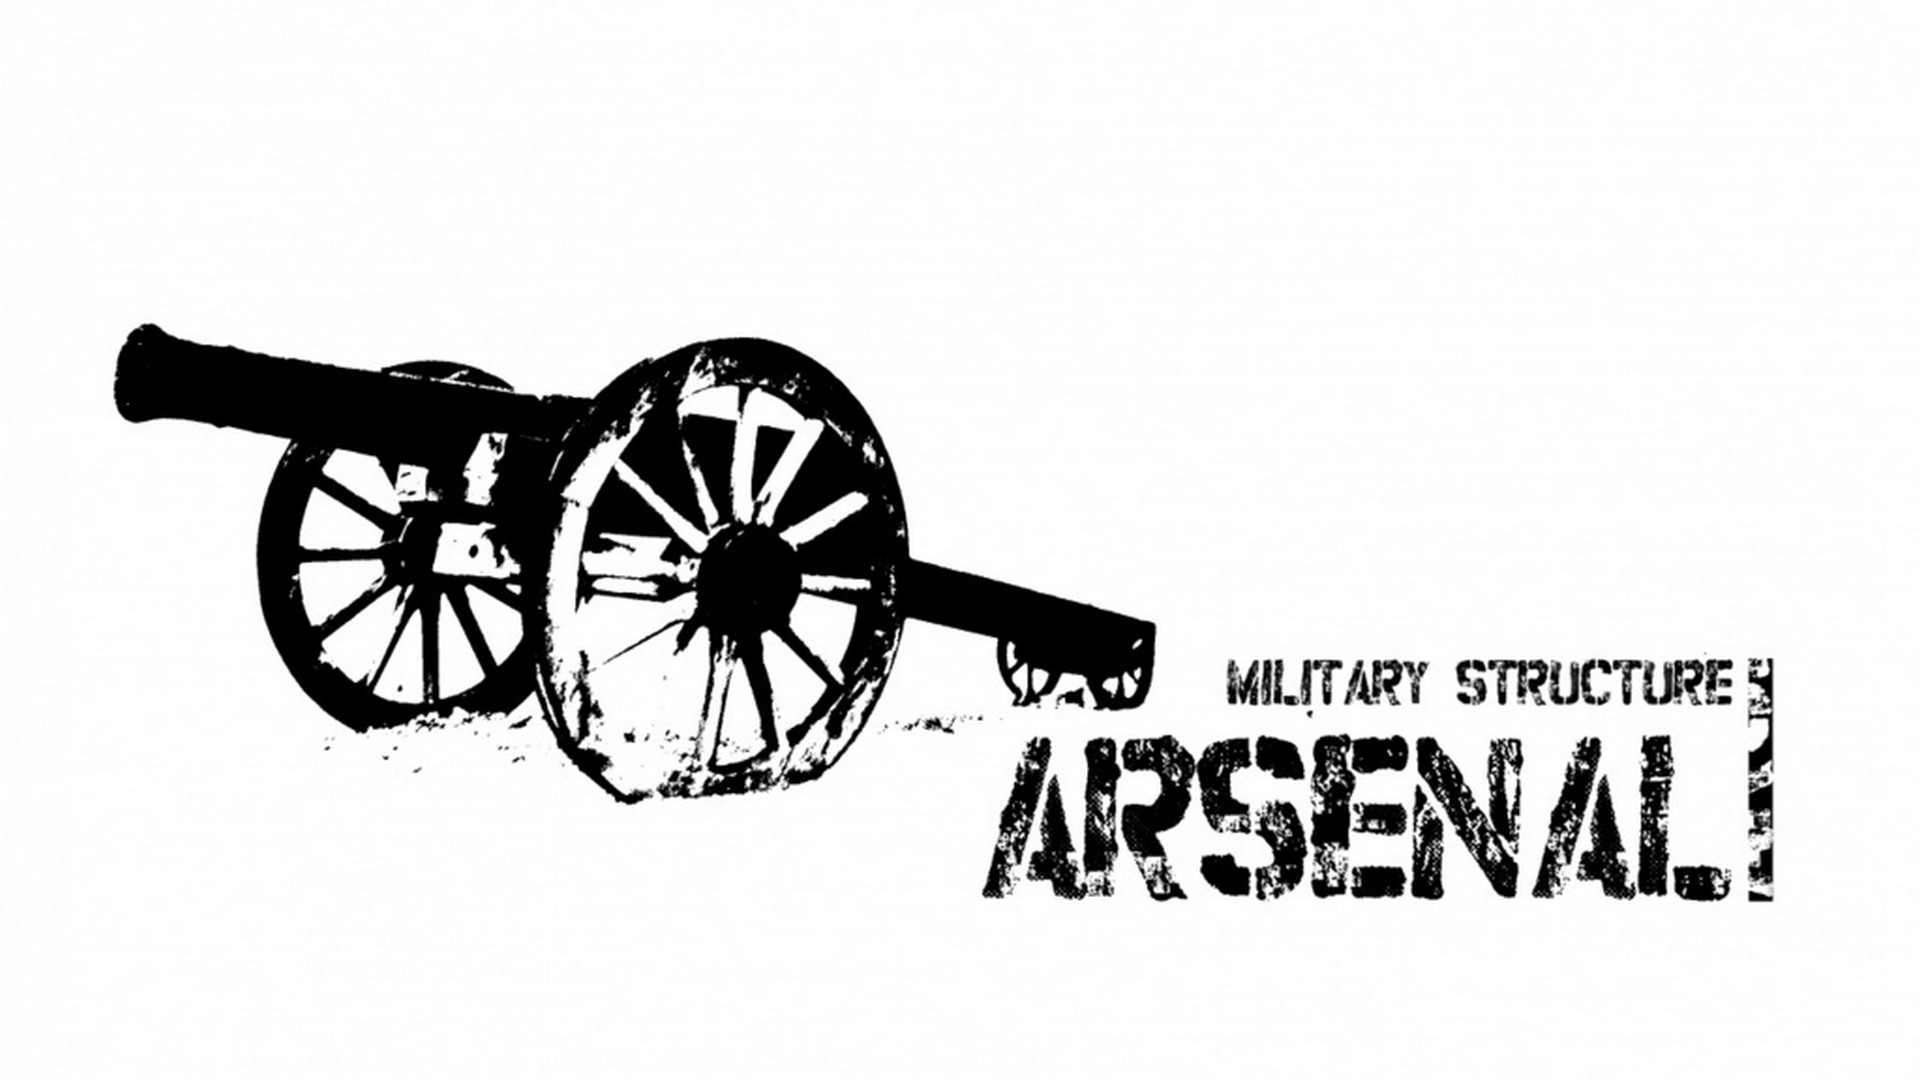 Arsenal Wallpaper HD Resolution